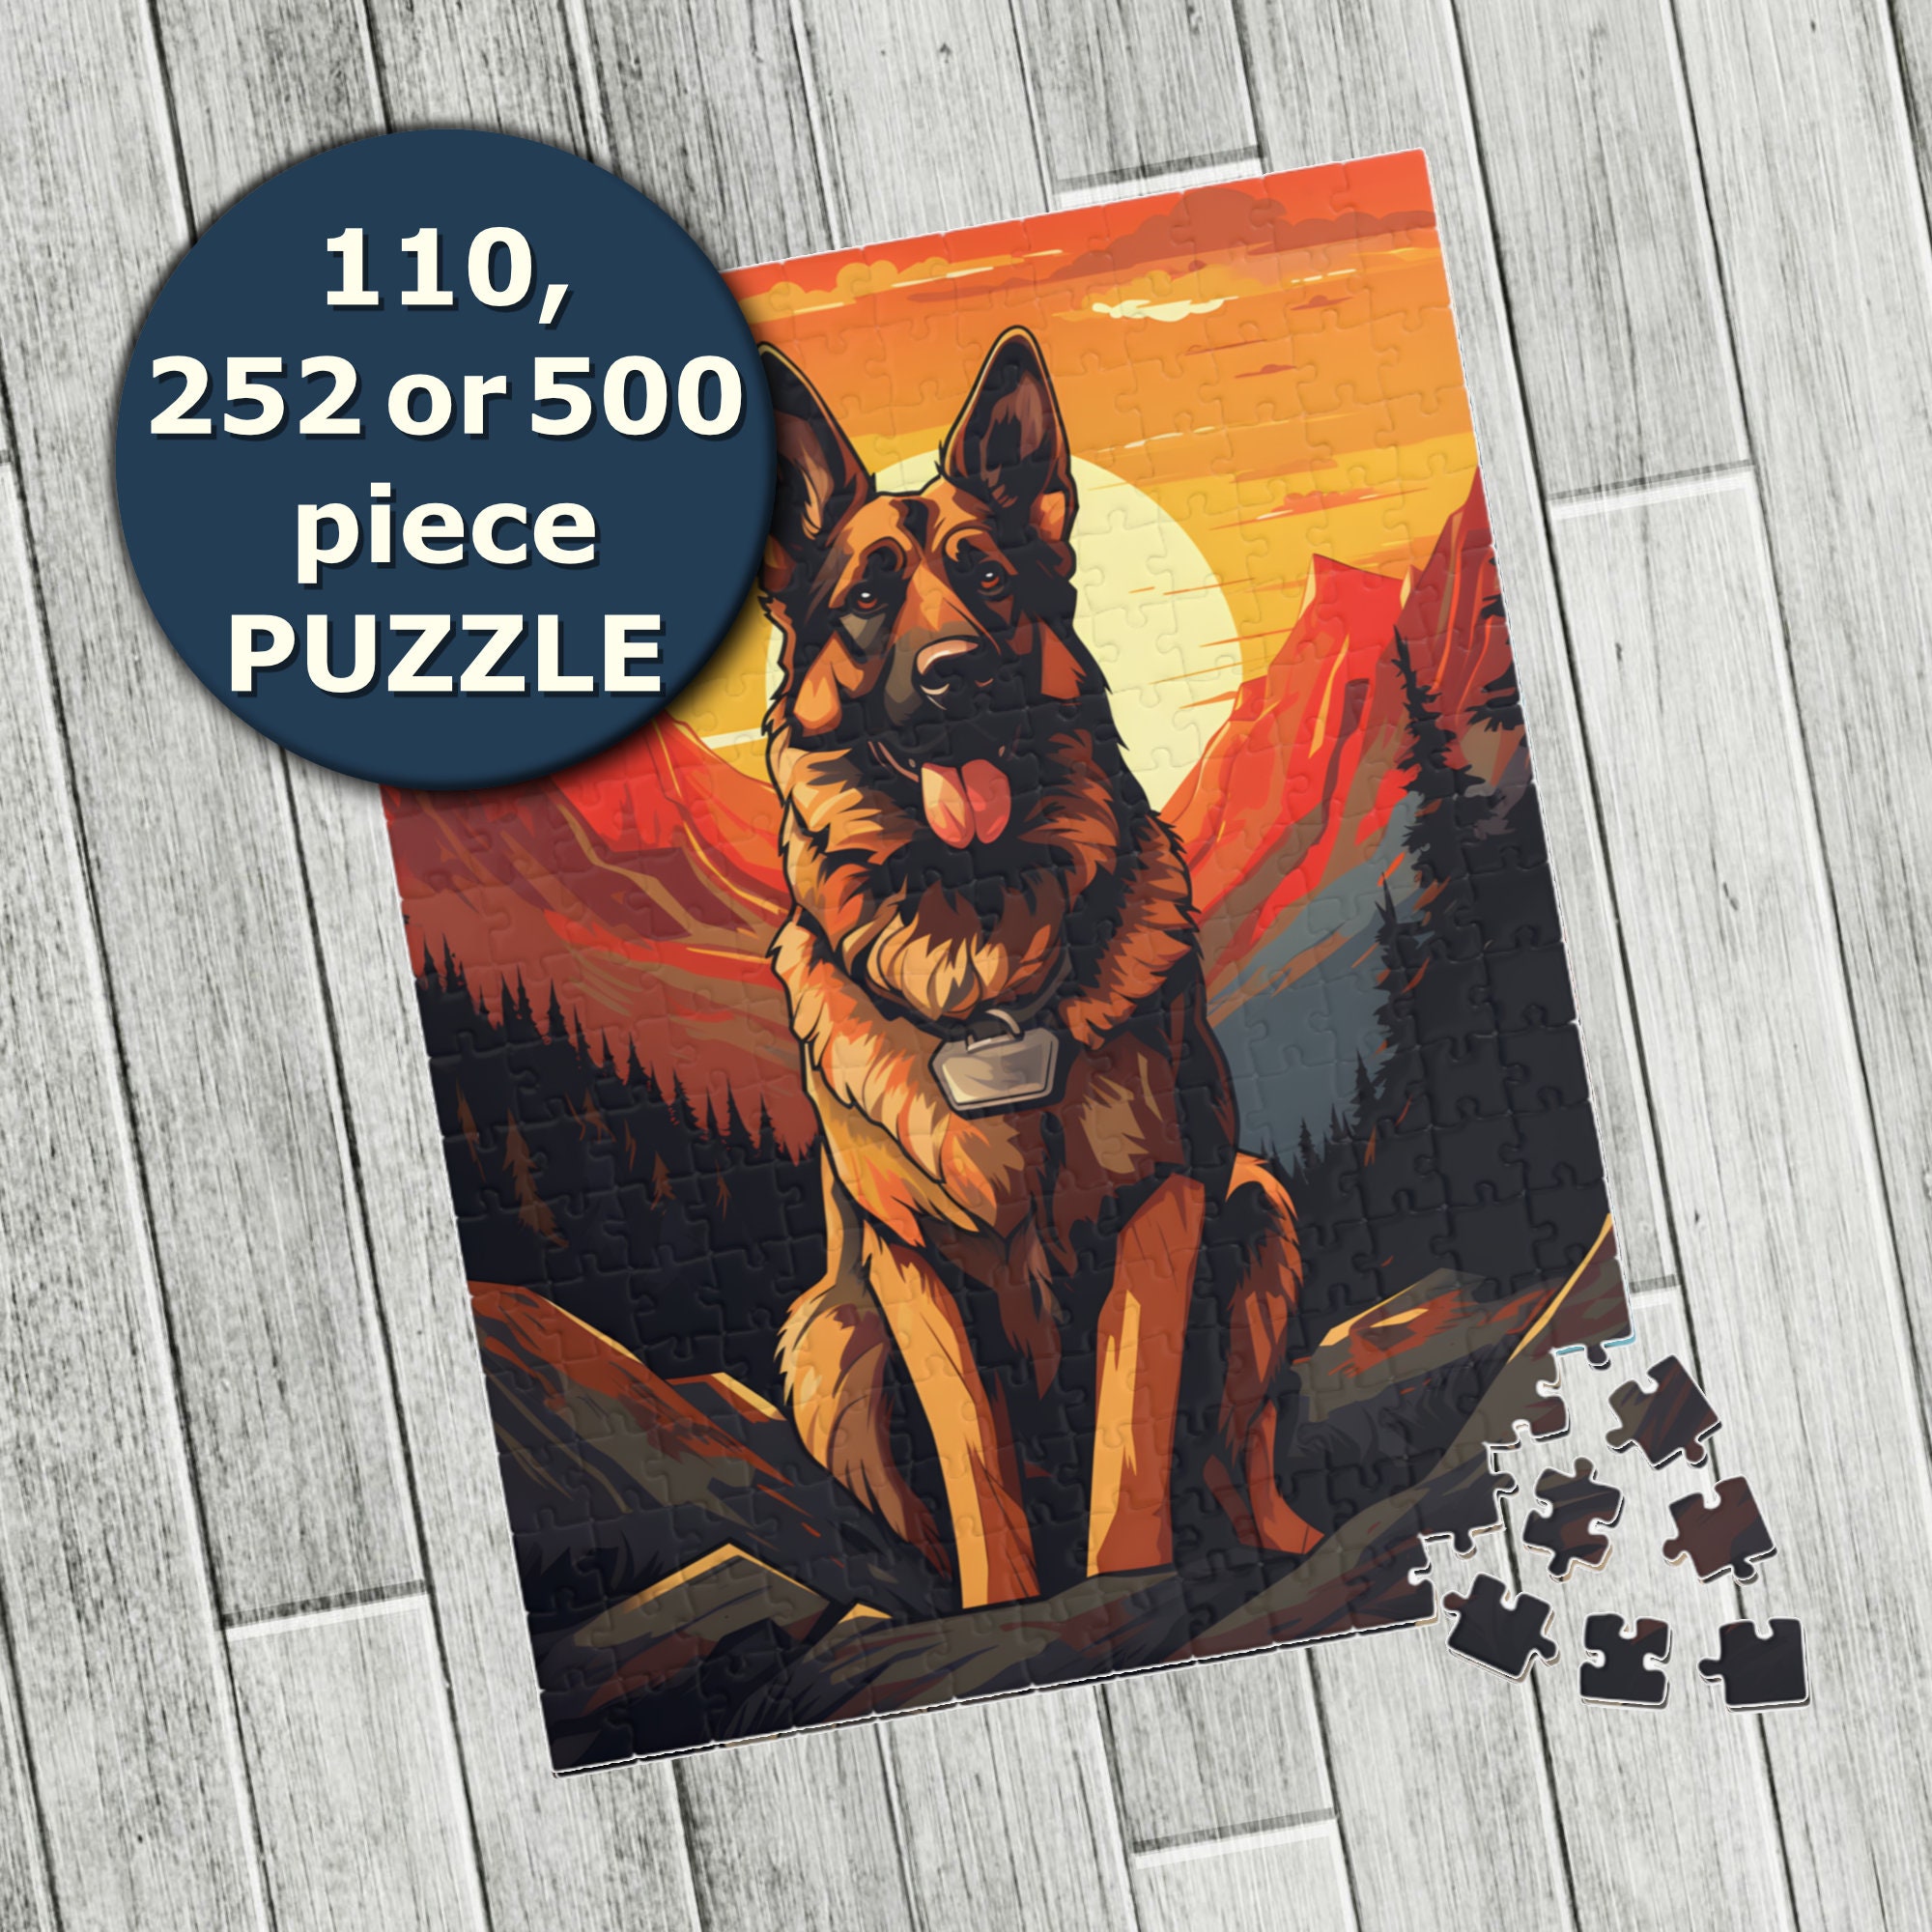 Jigsaw Puzzle of Dog German Shepherd three puppies